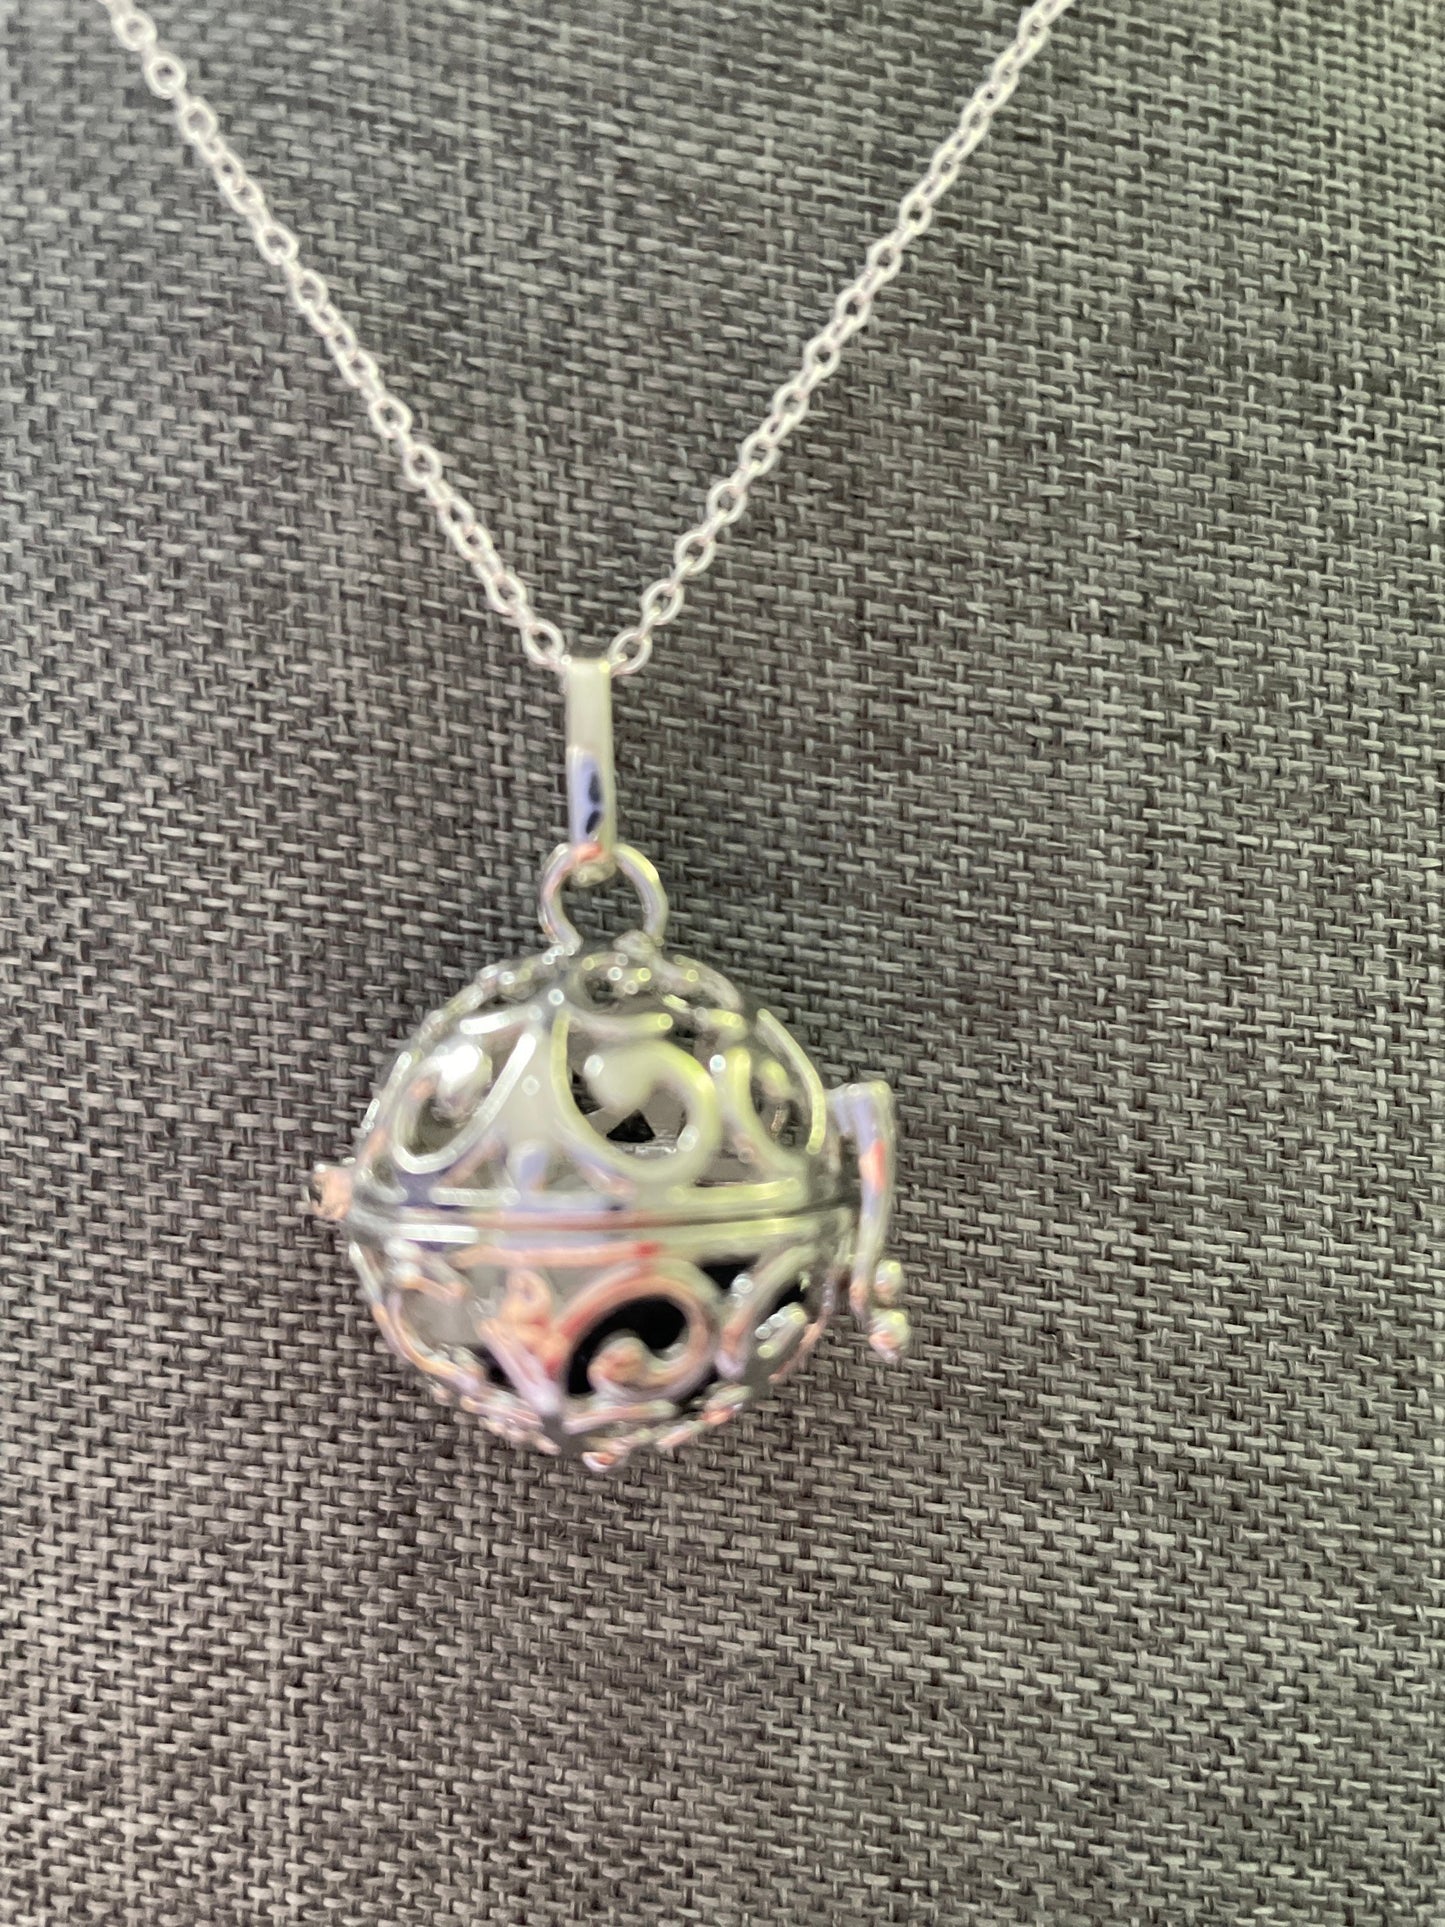 Antique Silver round locket with 6 interchangeable crystals on 16” chain amethyst carnelian aventurine Rose Quartz tourmaline selenite